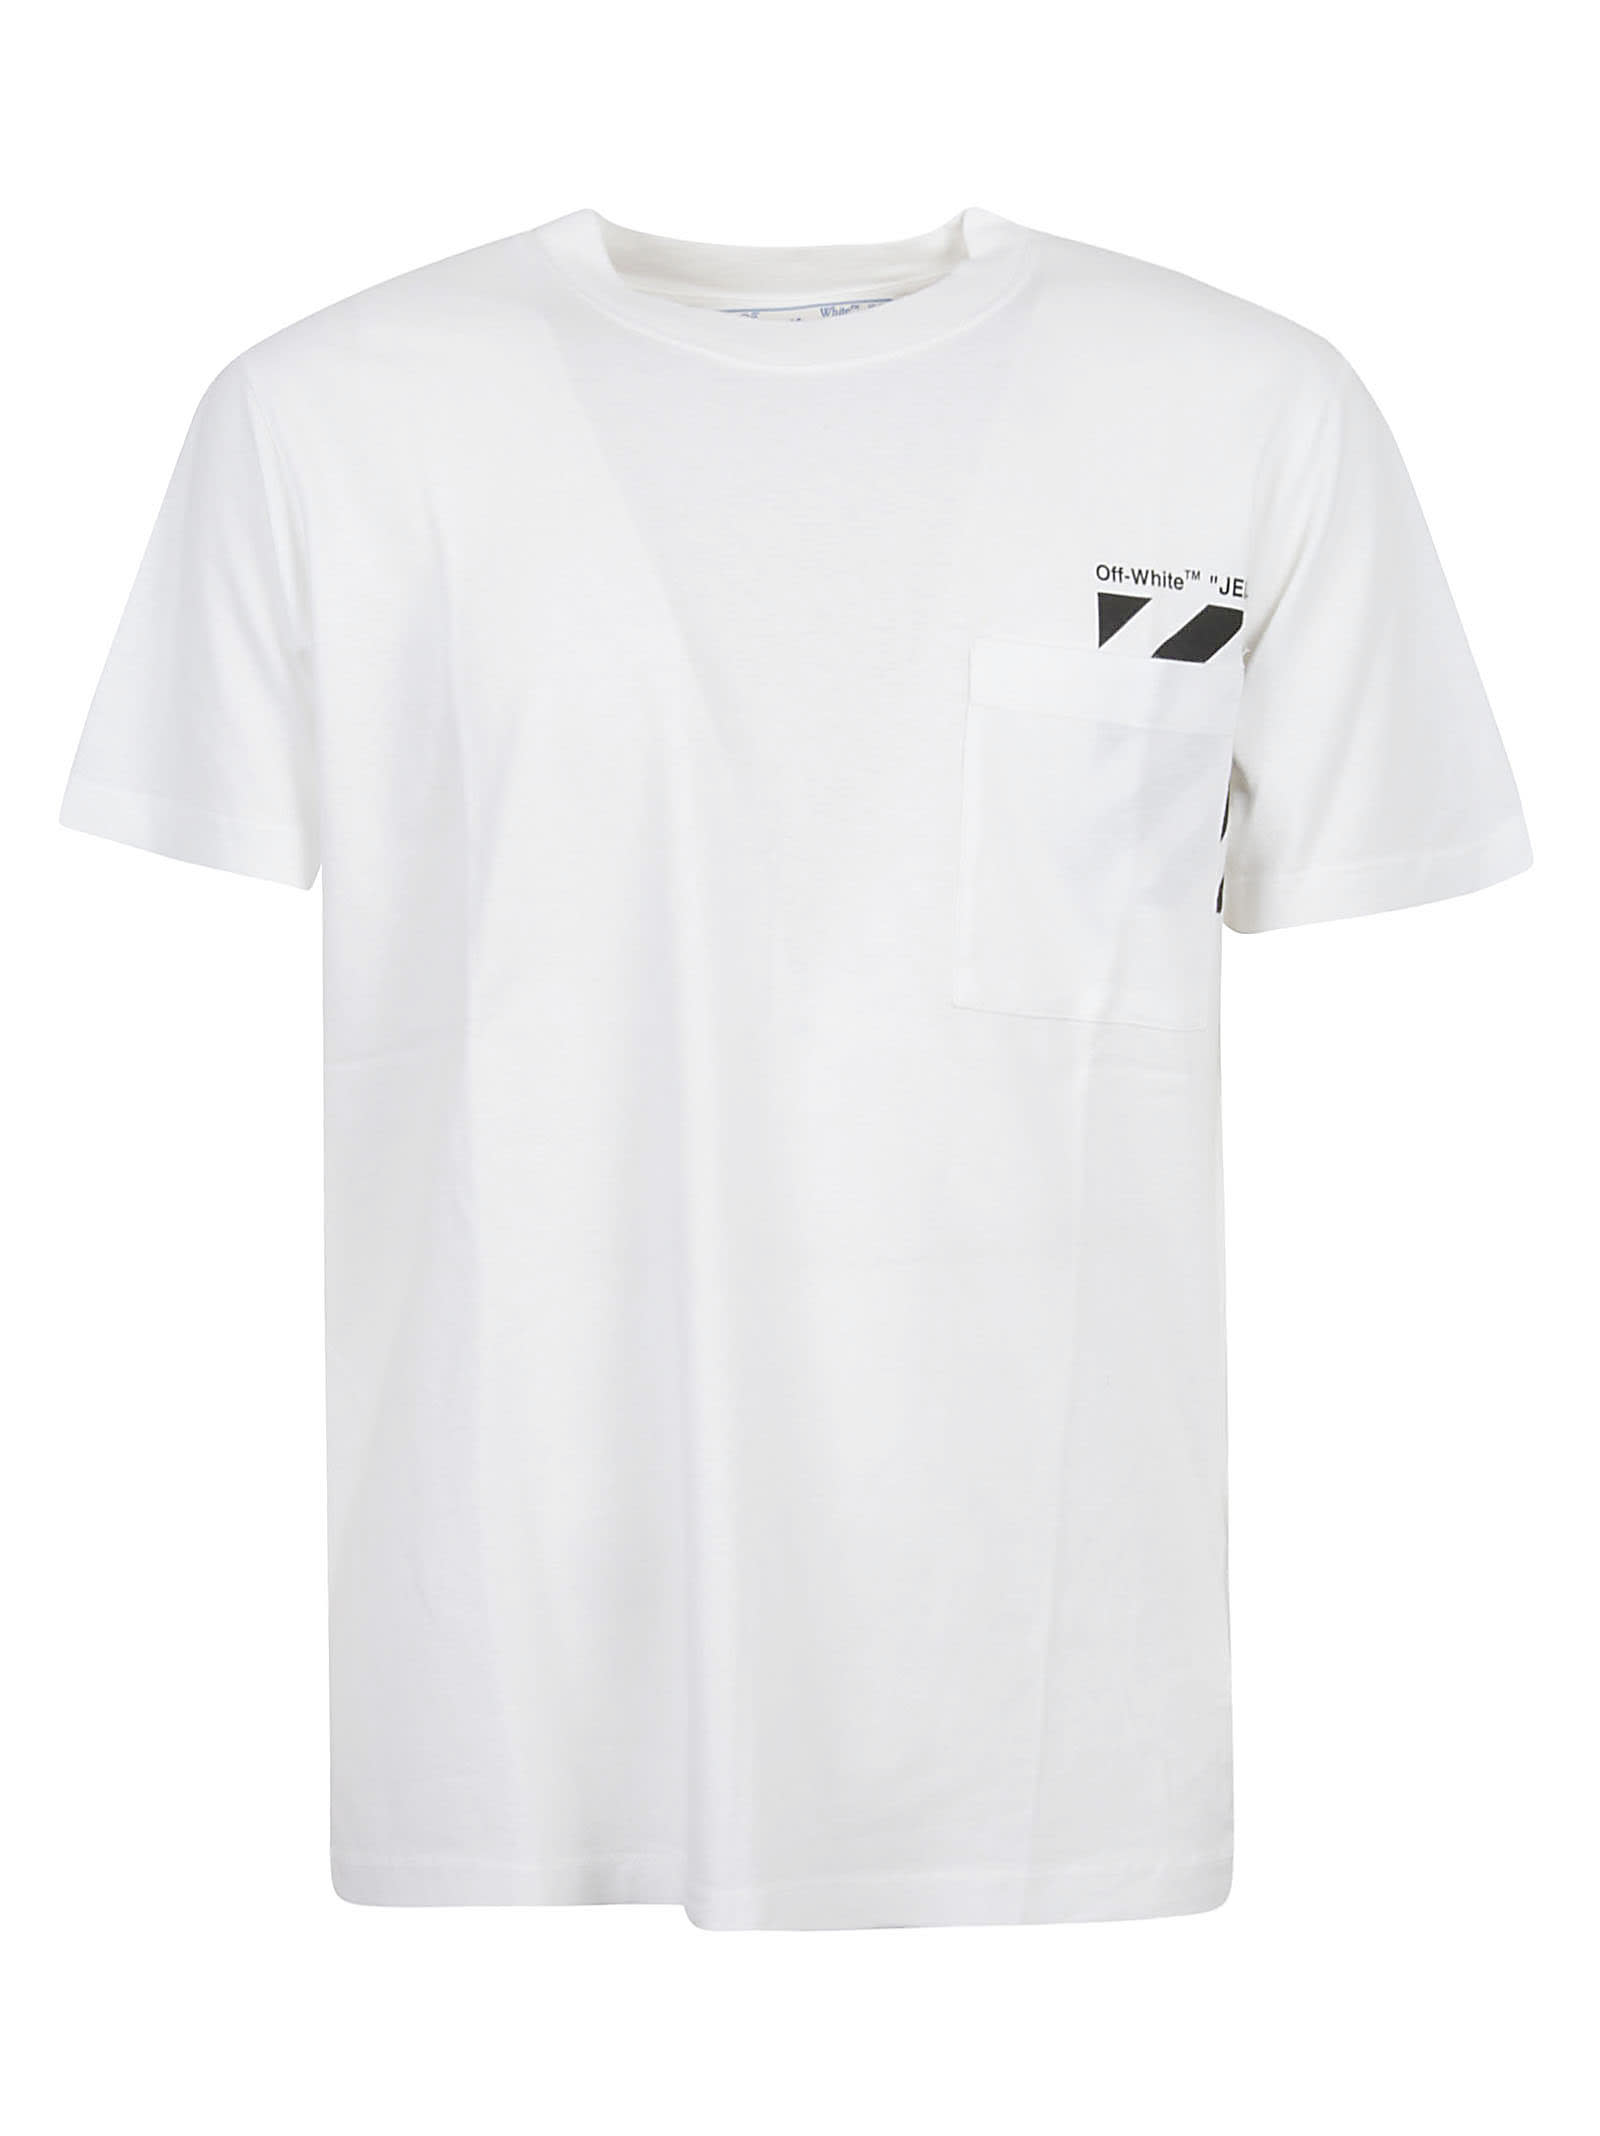 Off-White Chest Pocket Round Neck T-shirt